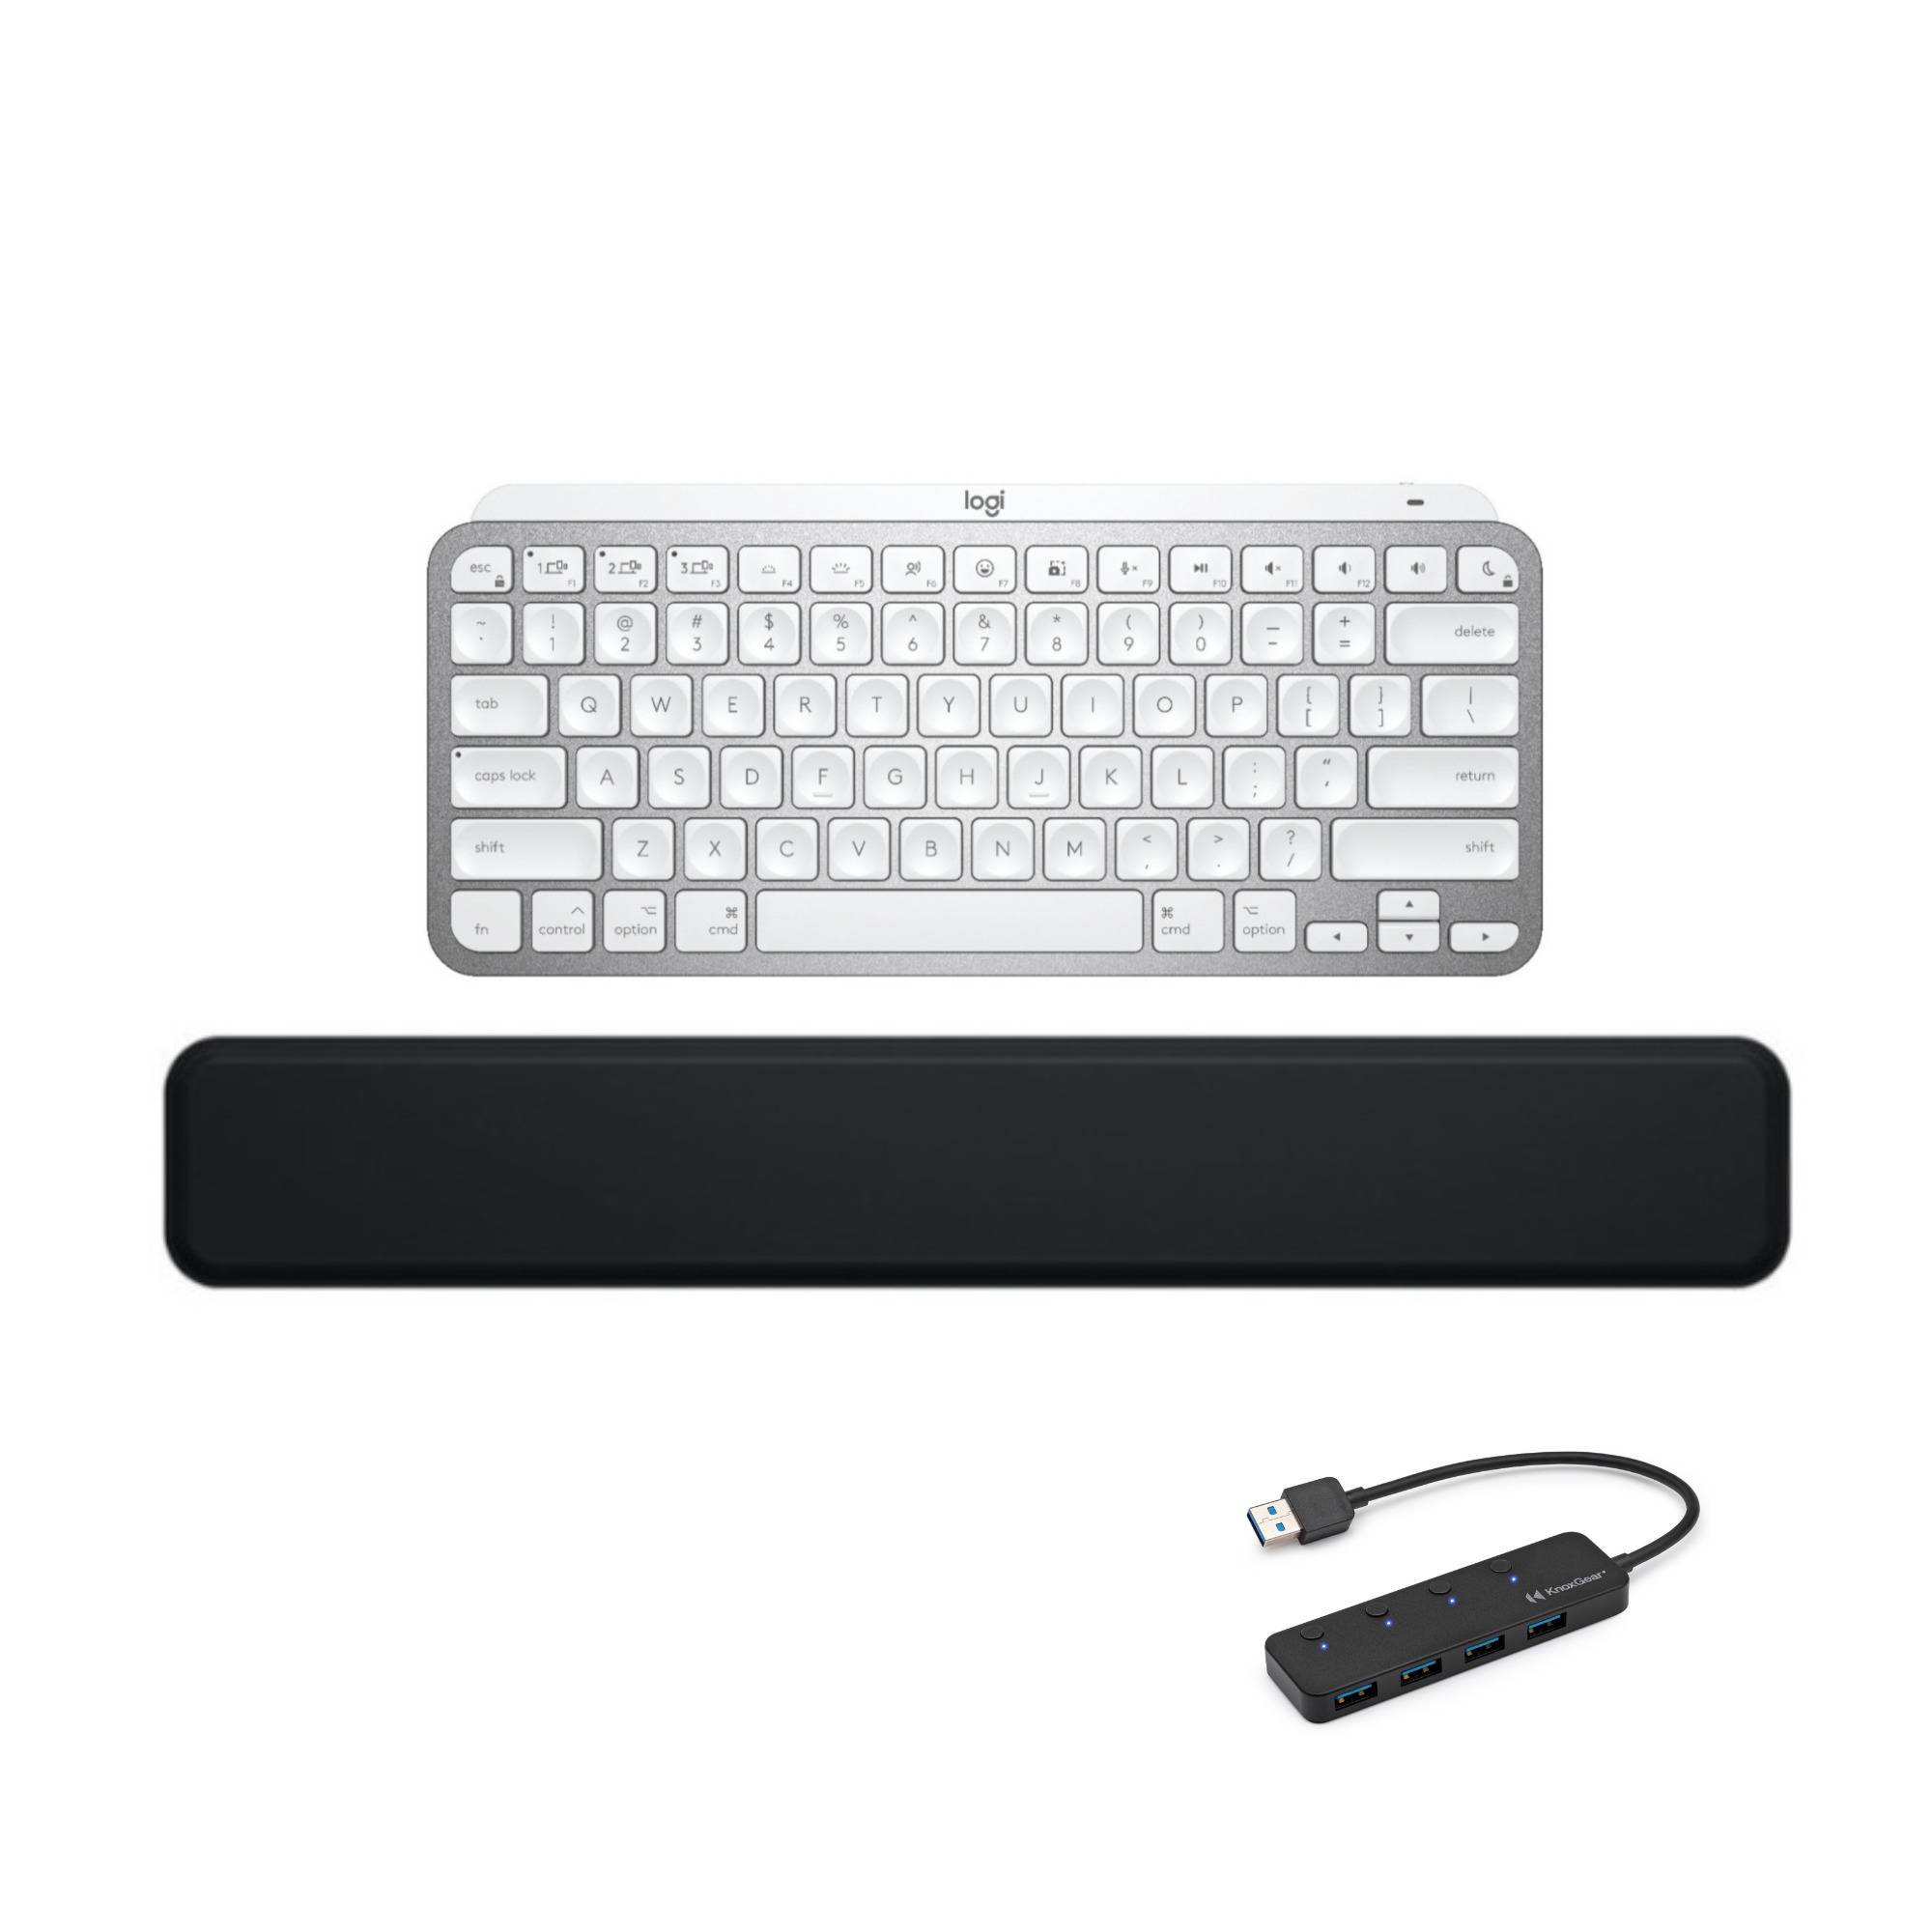 Logitech MX Keys Mini for Mac Wireless Illuminated Keyboard Bundle with Palm Rest and 4-Port USB Hub